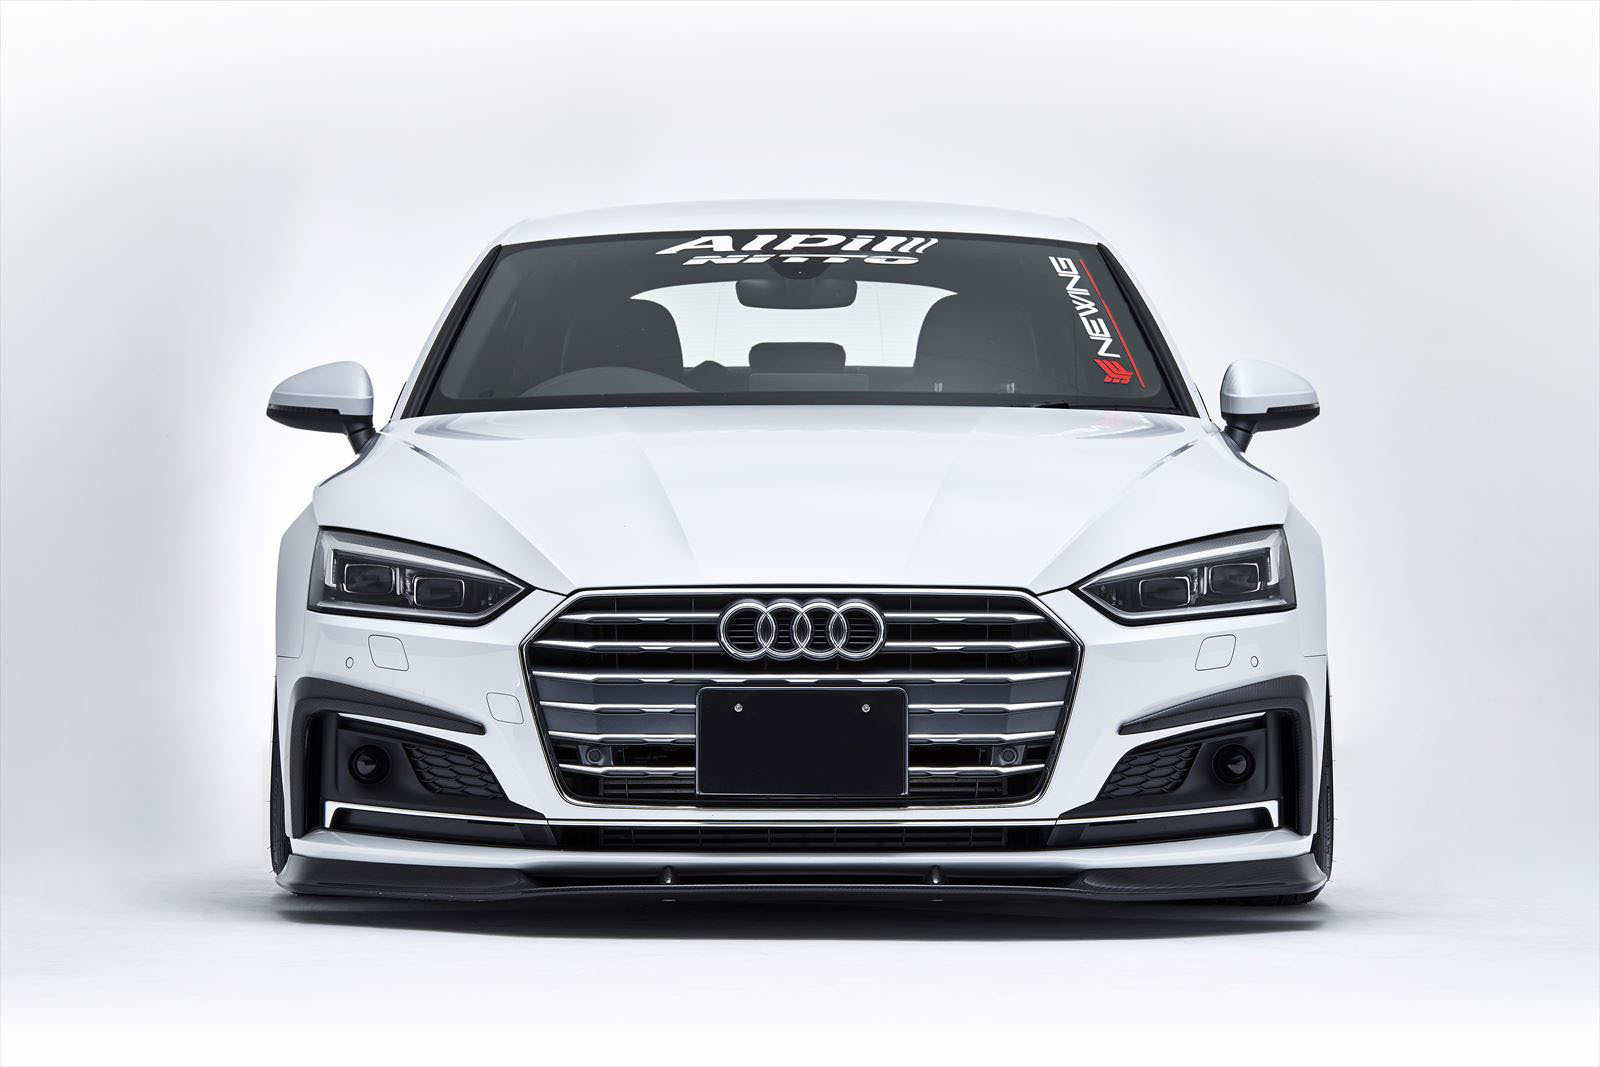 NEWING Bodi Kit for Audi S5 / A5 S-Line Sportback latest model